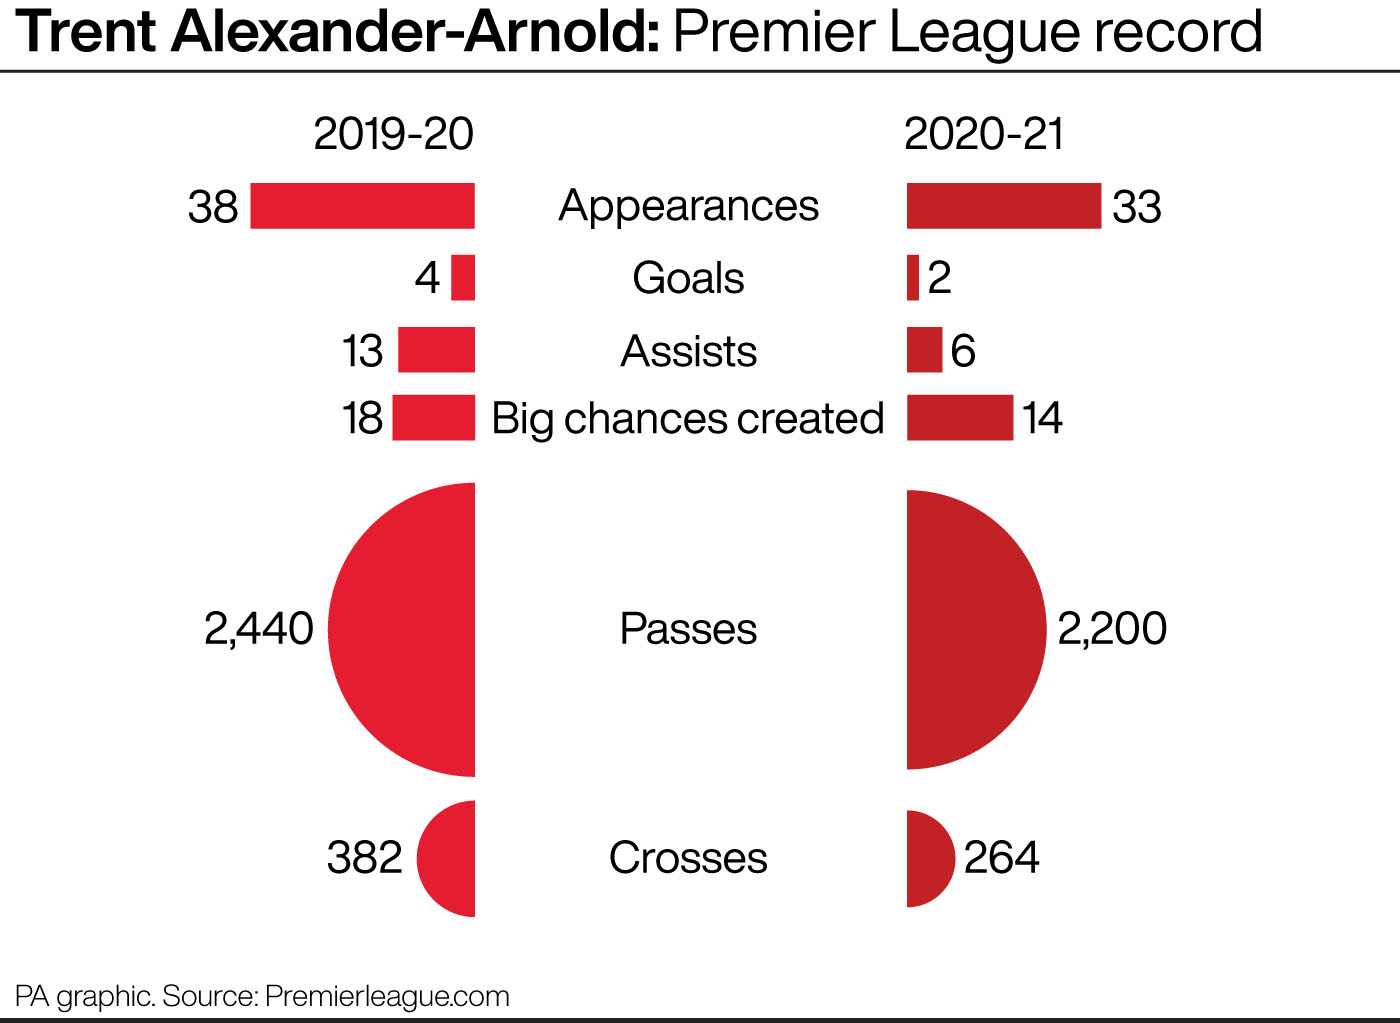 Trent Alexander Arnold: Premier League record, 2019-20 v 2020-21